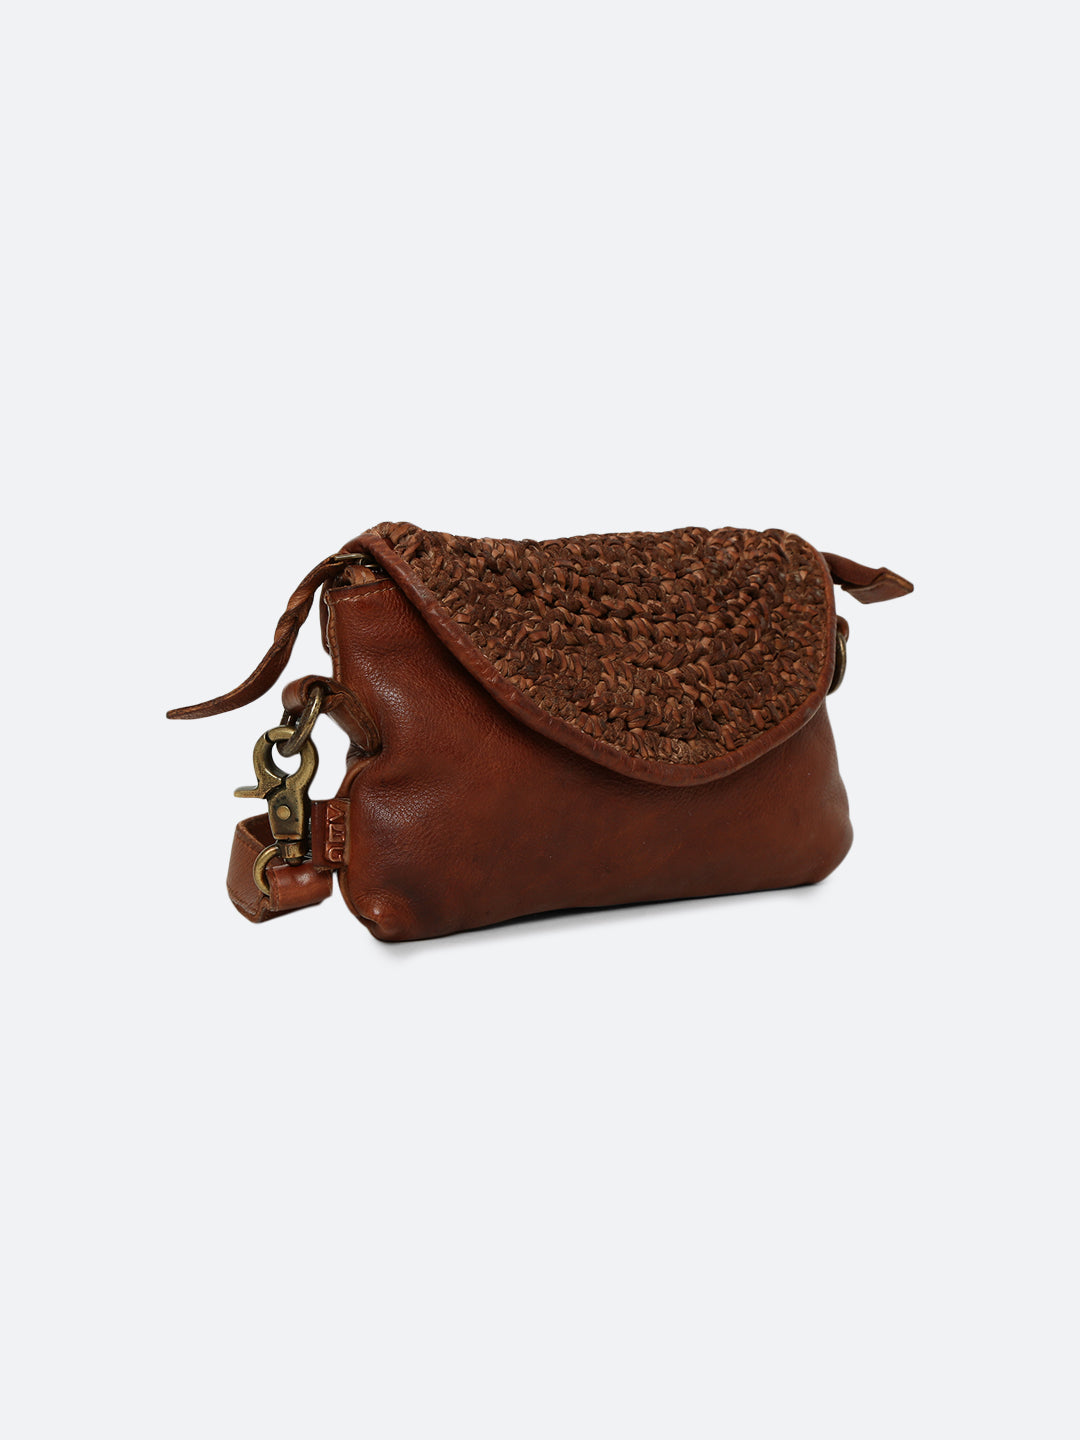 Cognac Leather Sling Bag With Weaving By Art N Vintage